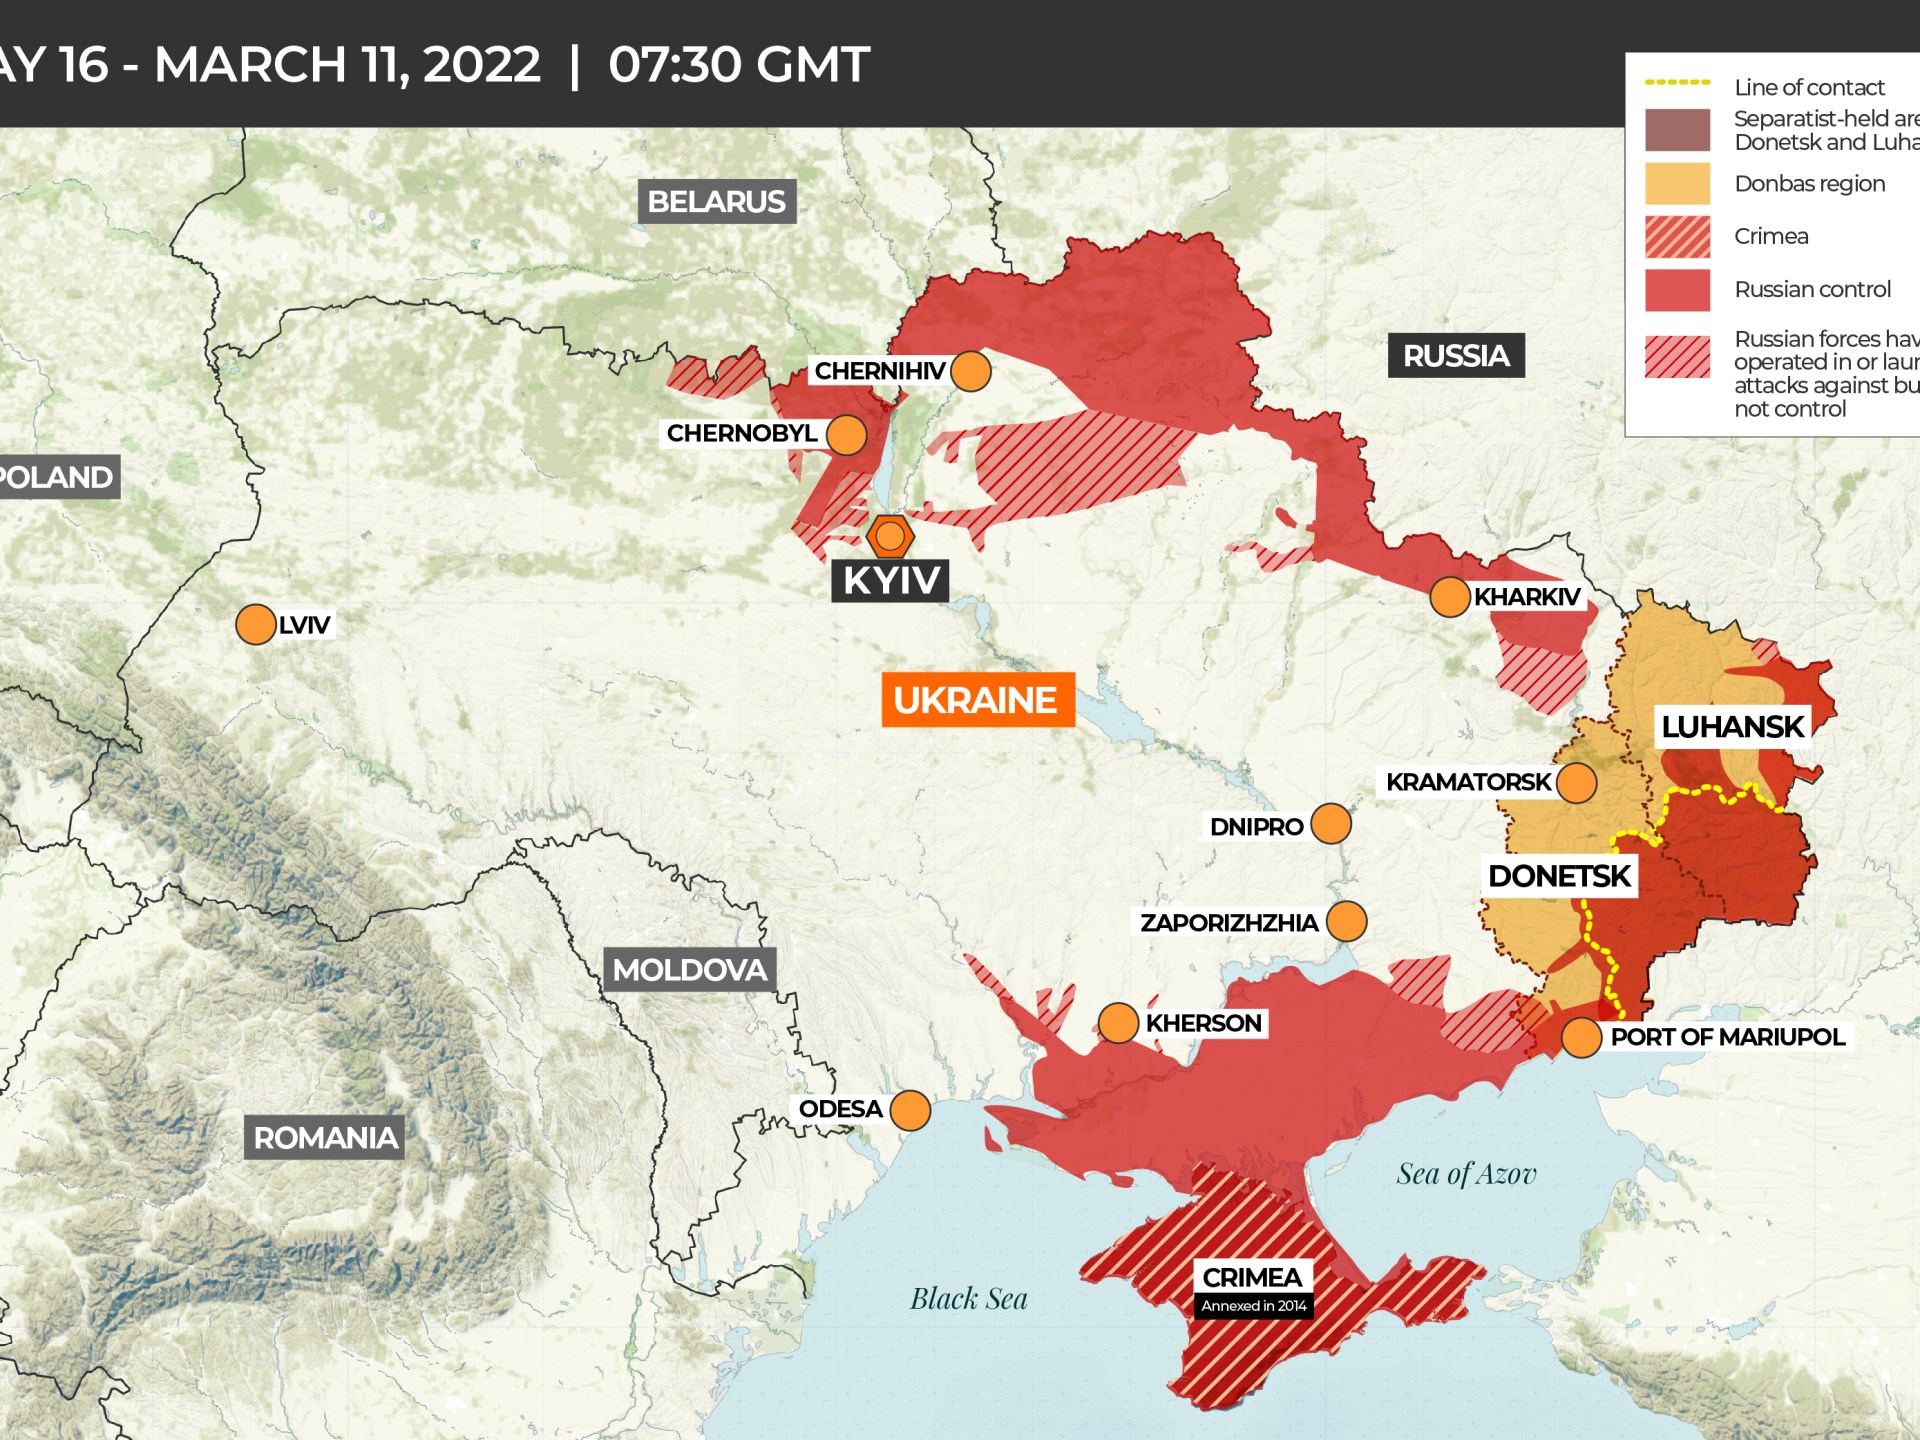 RussiaUkraine war military dispatch March 11, 2022 RussiaUkraine